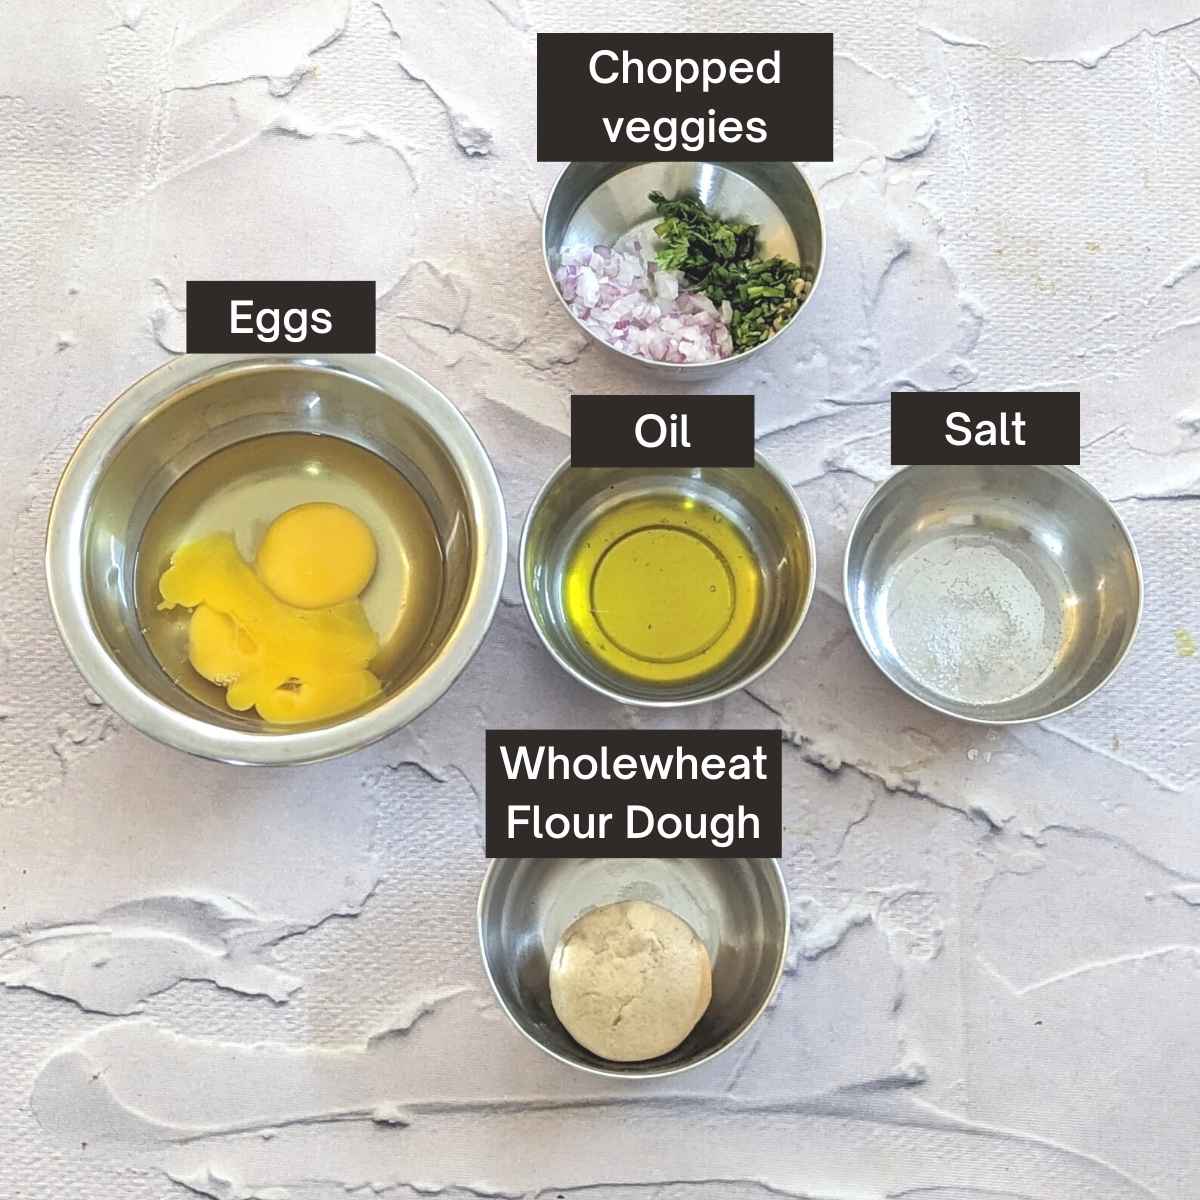 Ingredients to make egg paratha: broken eggs, oil, salt, chopped veggies and wholewheat flour dough.